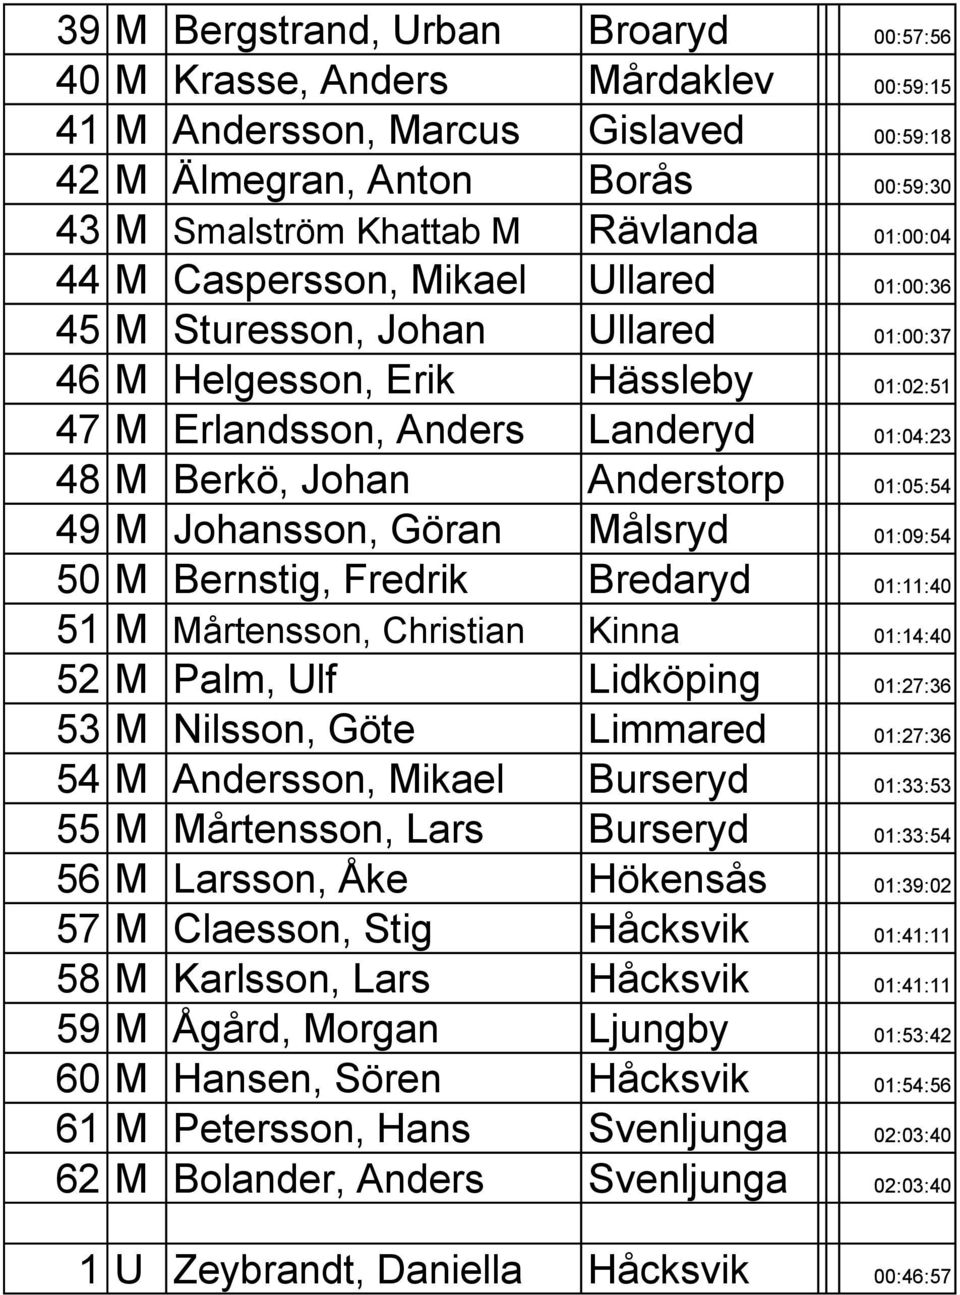 49 M Johansson, Göran Målsryd 01:09:54 50 M Bernstig, Fredrik Bredaryd 01:11:40 51 M Mårtensson, Christian Kinna 01:14:40 52 M Palm, Ulf Lidköping 01:27:36 53 M Nilsson, Göte Limmared 01:27:36 54 M